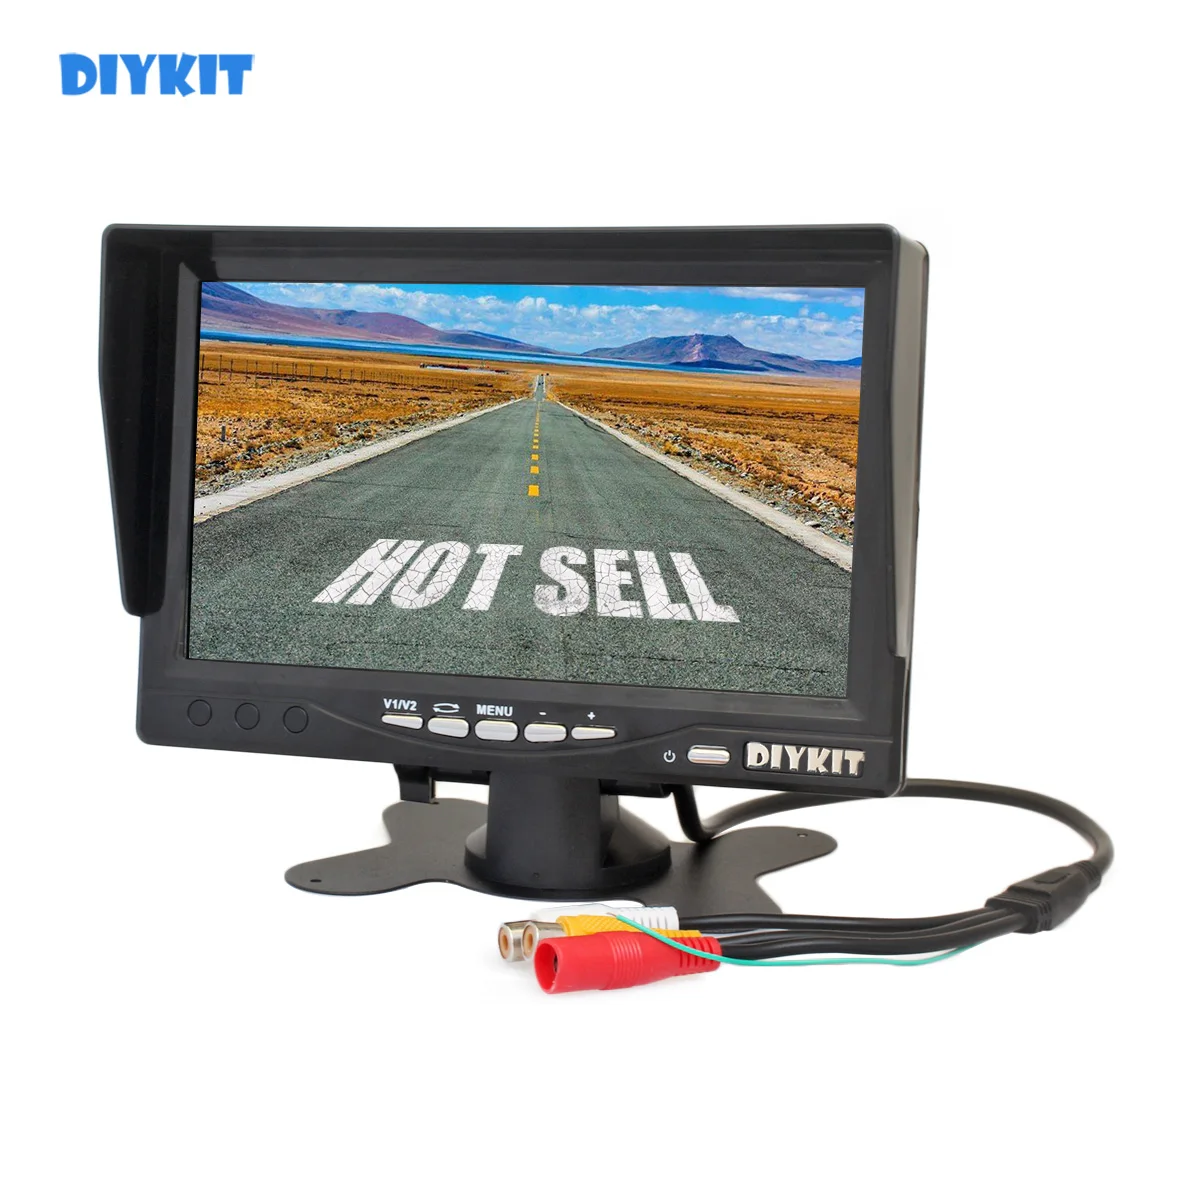 

DIYKIT 7" HD TFT LCD Car Monitor Display Car Reverse Rear View Monitor Screen AV Input Remote Control With Sun Shade